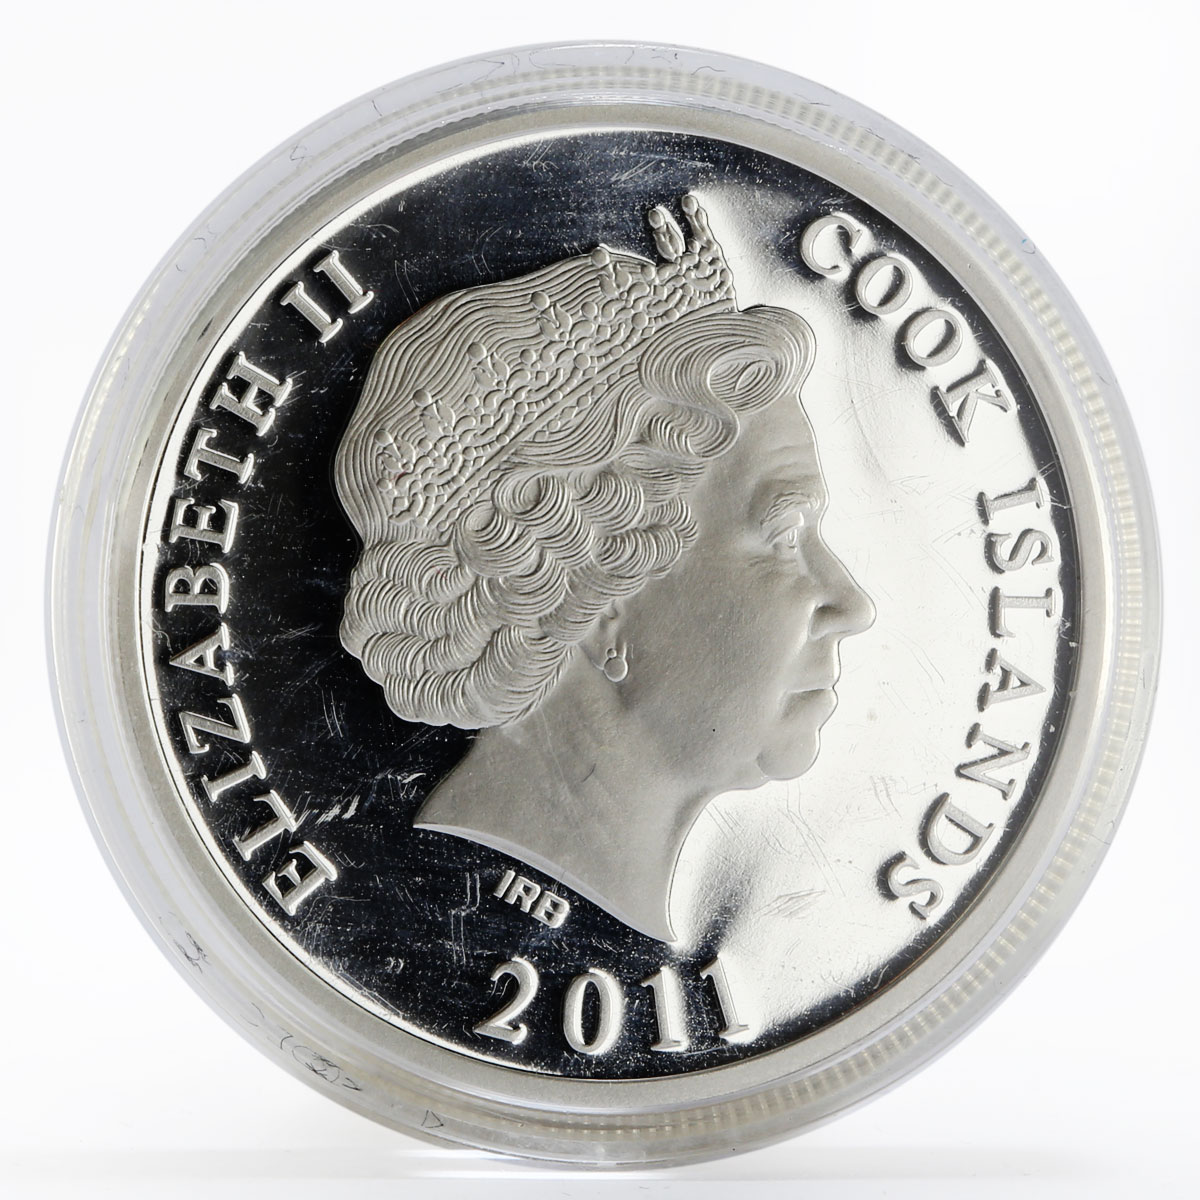 Cook Islands 10 dollars Black Swan Treasure Ship proof silver coin 2011